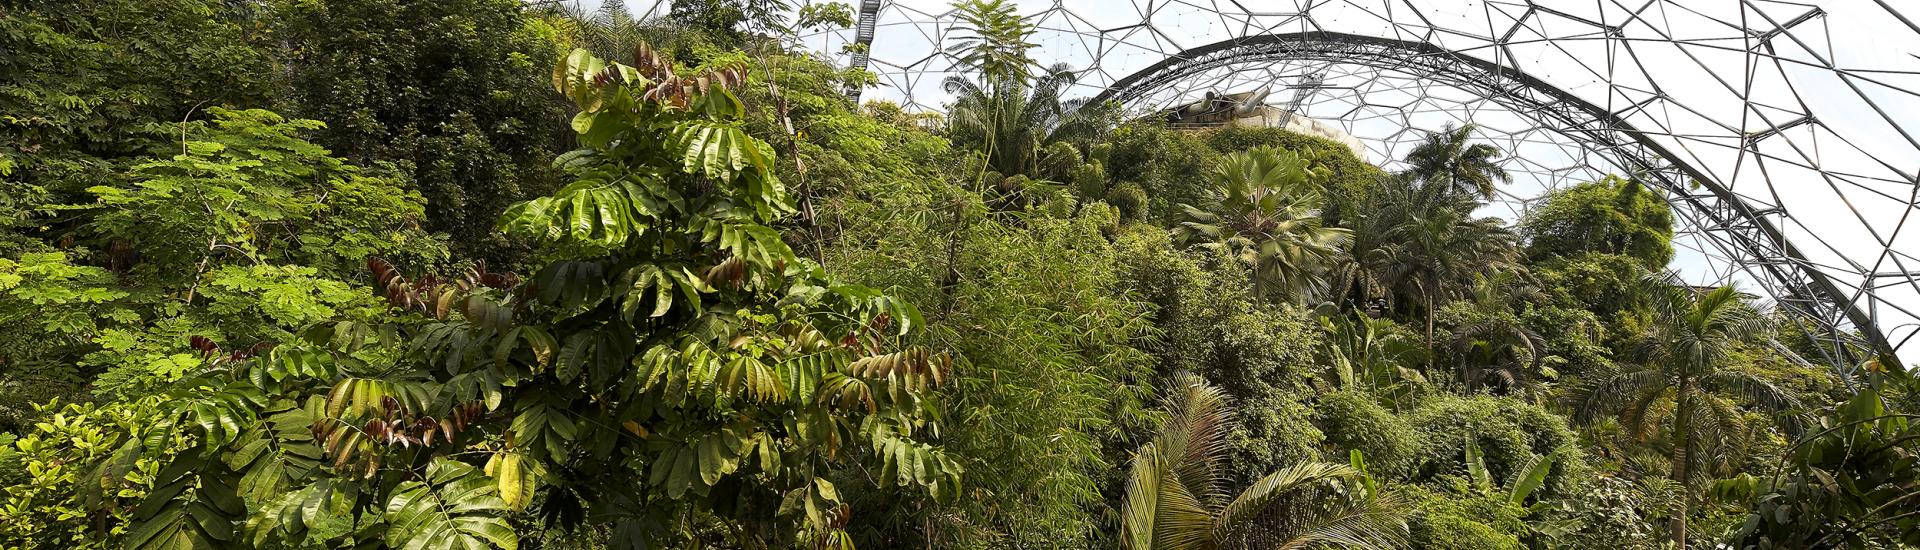 tropical rainforest ecosystem project